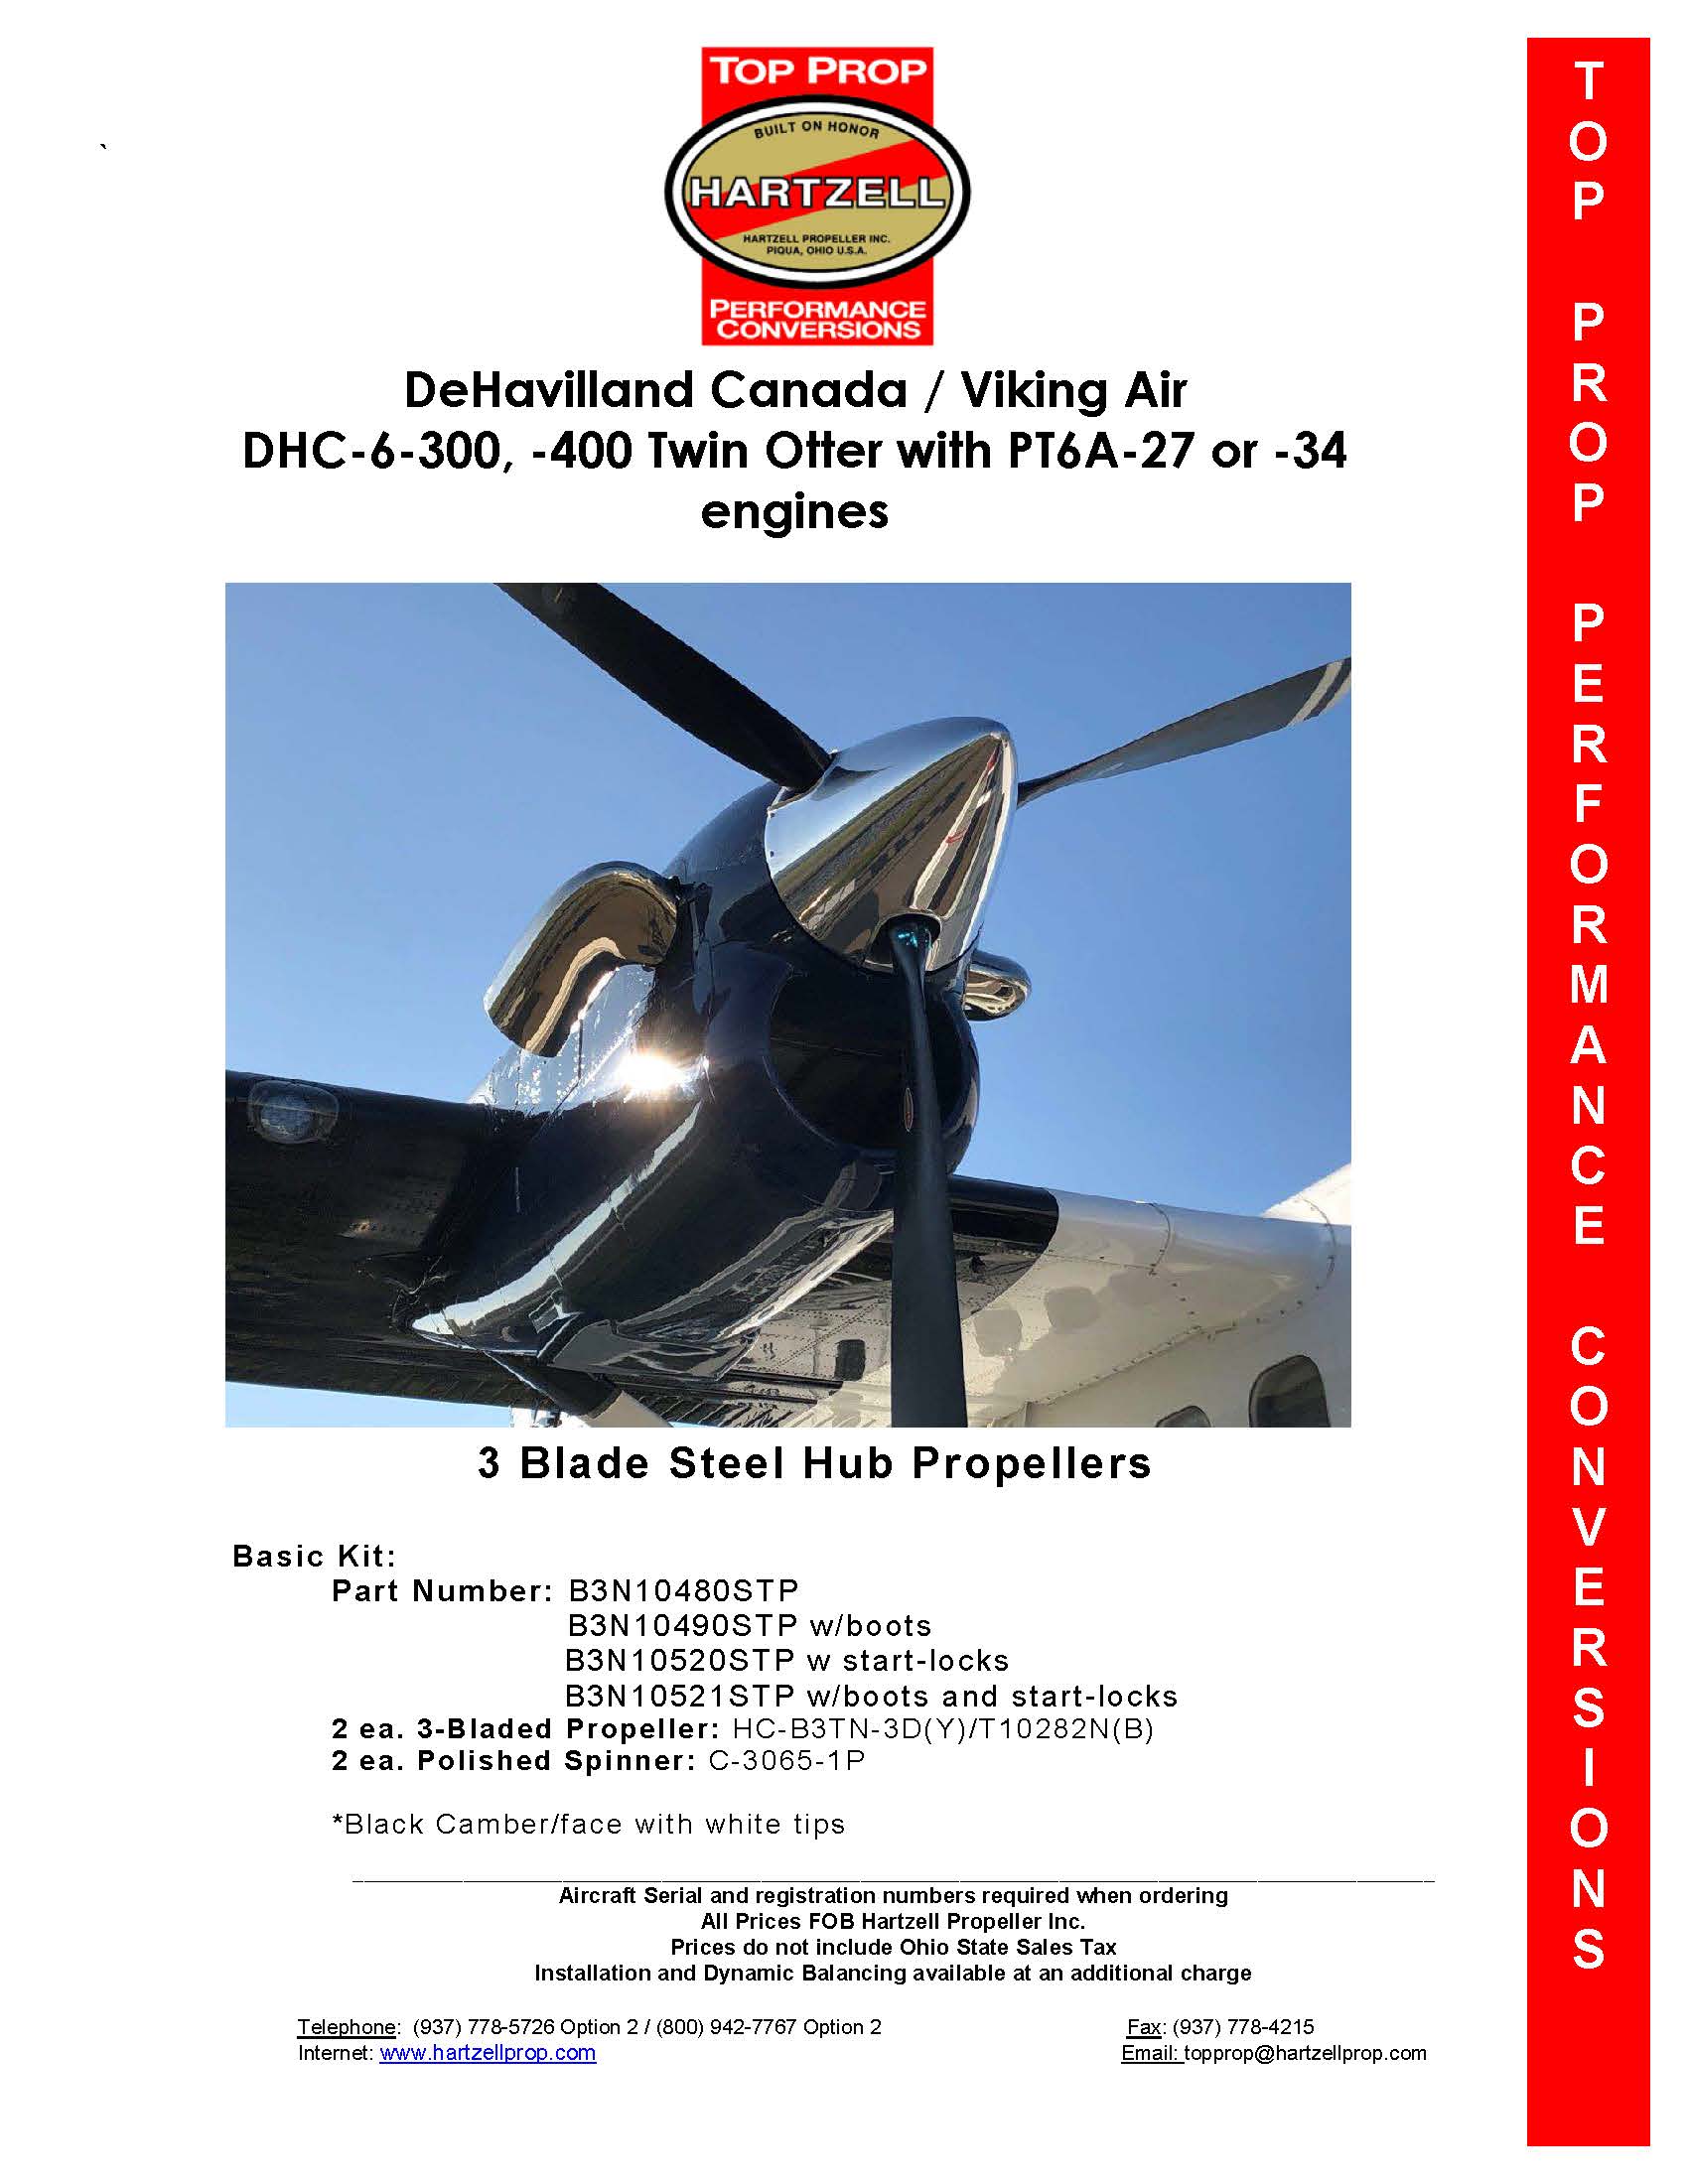 DEHAVILLAND-Viking-DHC-6-300-400-Twin-Otter-B3N10480STP-B3N10490STP-B3N10520STP-B310521STP-PICTURE-1